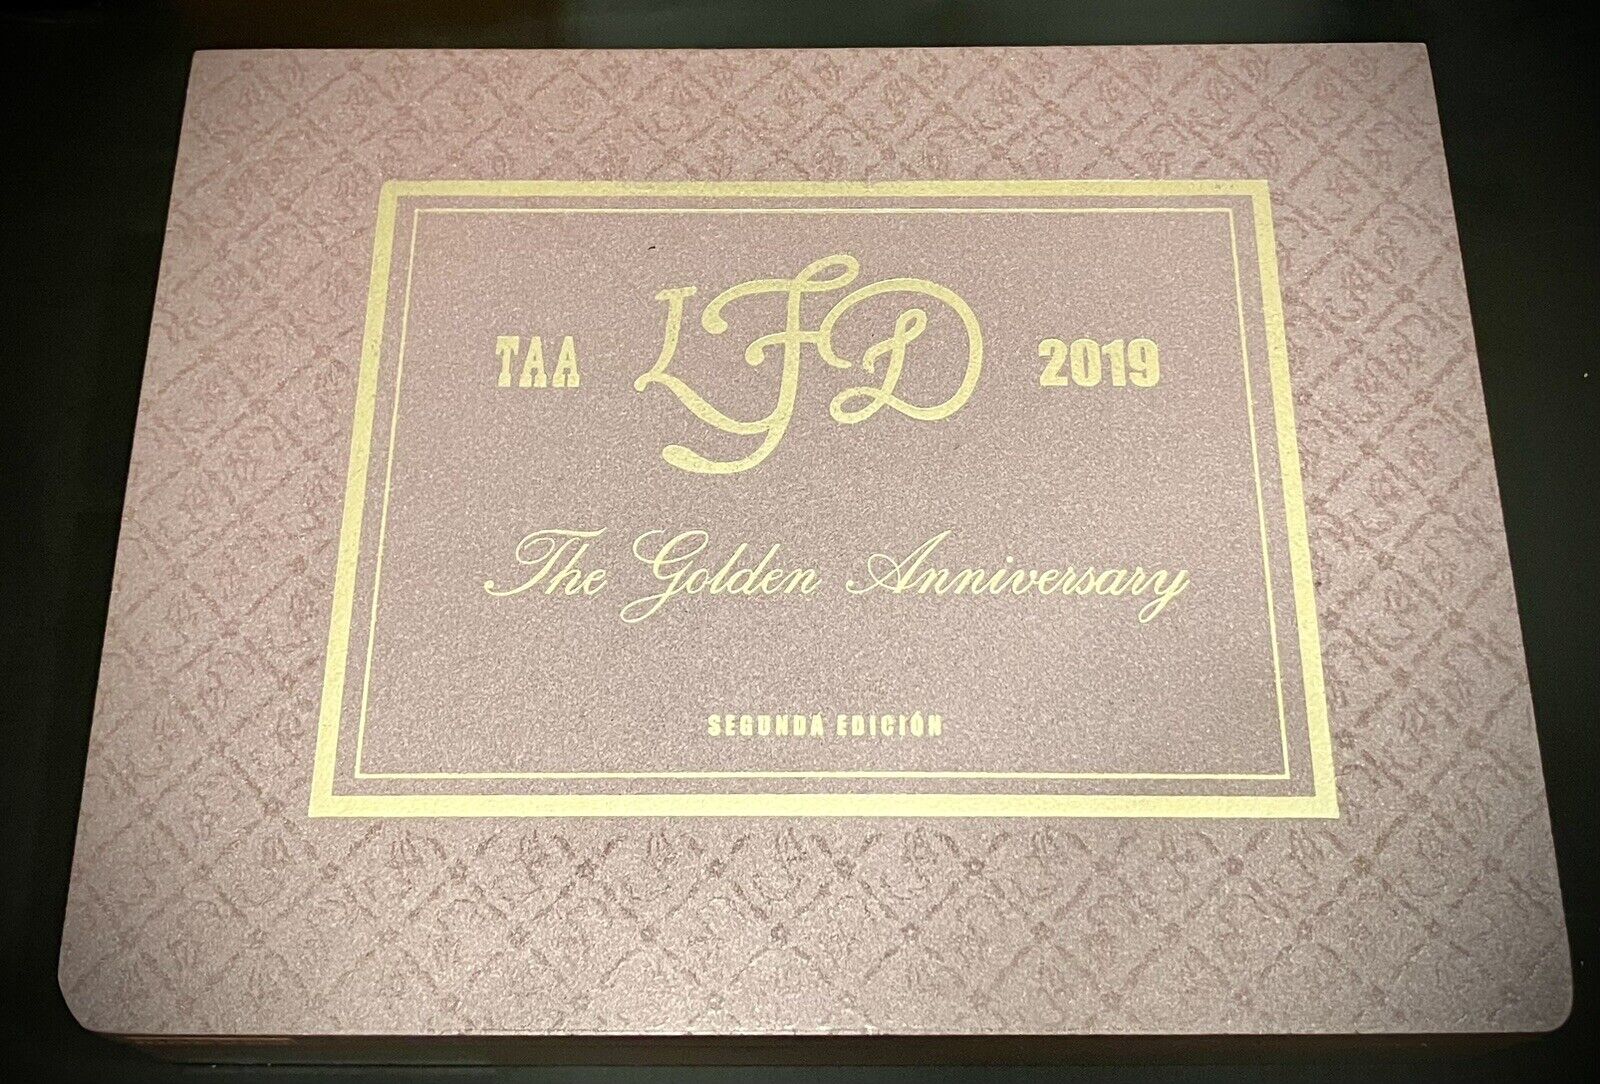 La Flor Dominicana TAA 2019 Golden Anniversary Limited Edition Segunda 10X7.5X2